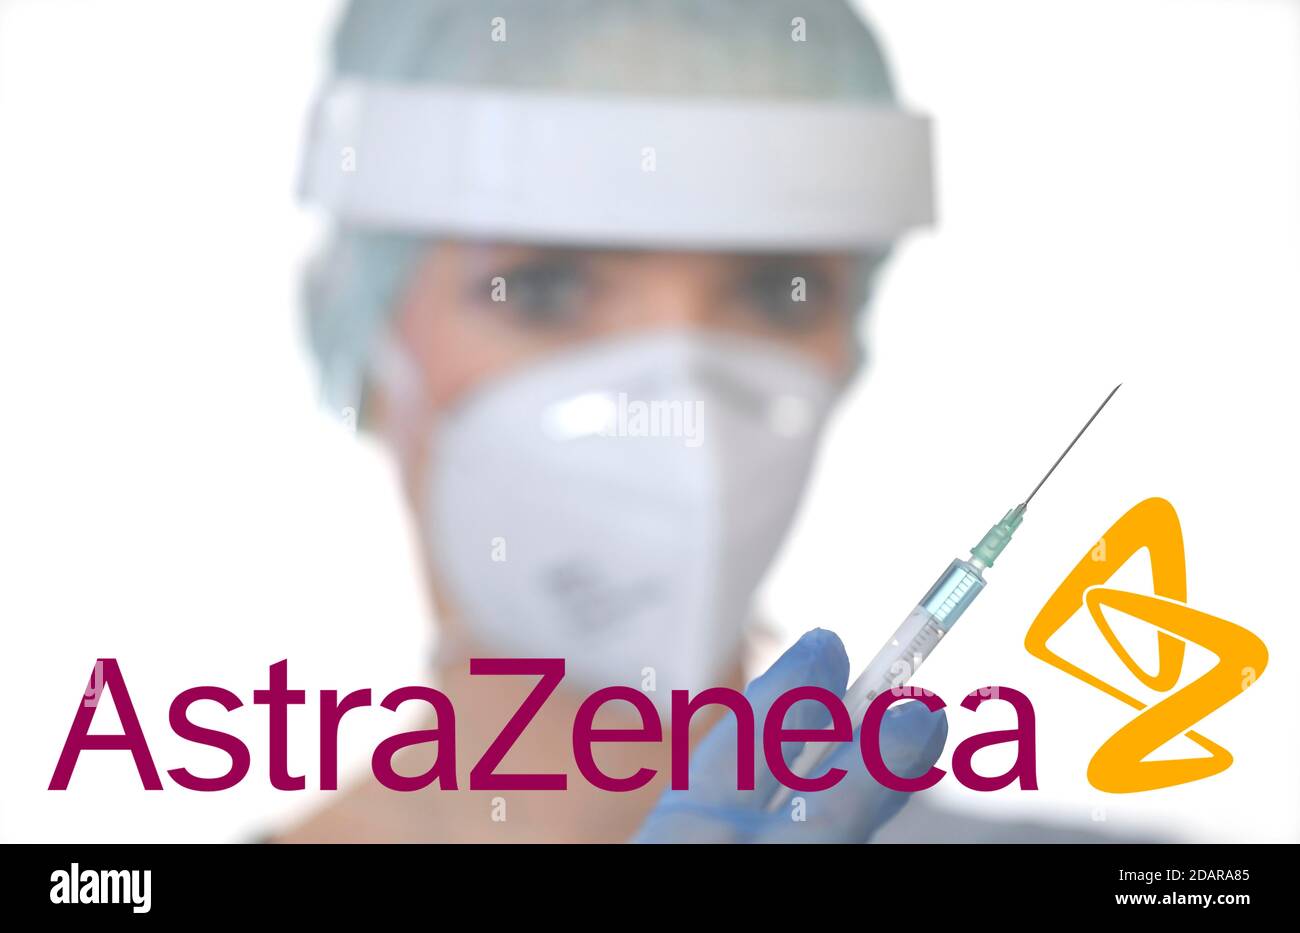 Symbole photo vaccin Corona de la société ASTRAZENECA, femme avec seringue, crise corona, Bade-Wurtemberg, Allemagne Banque D'Images